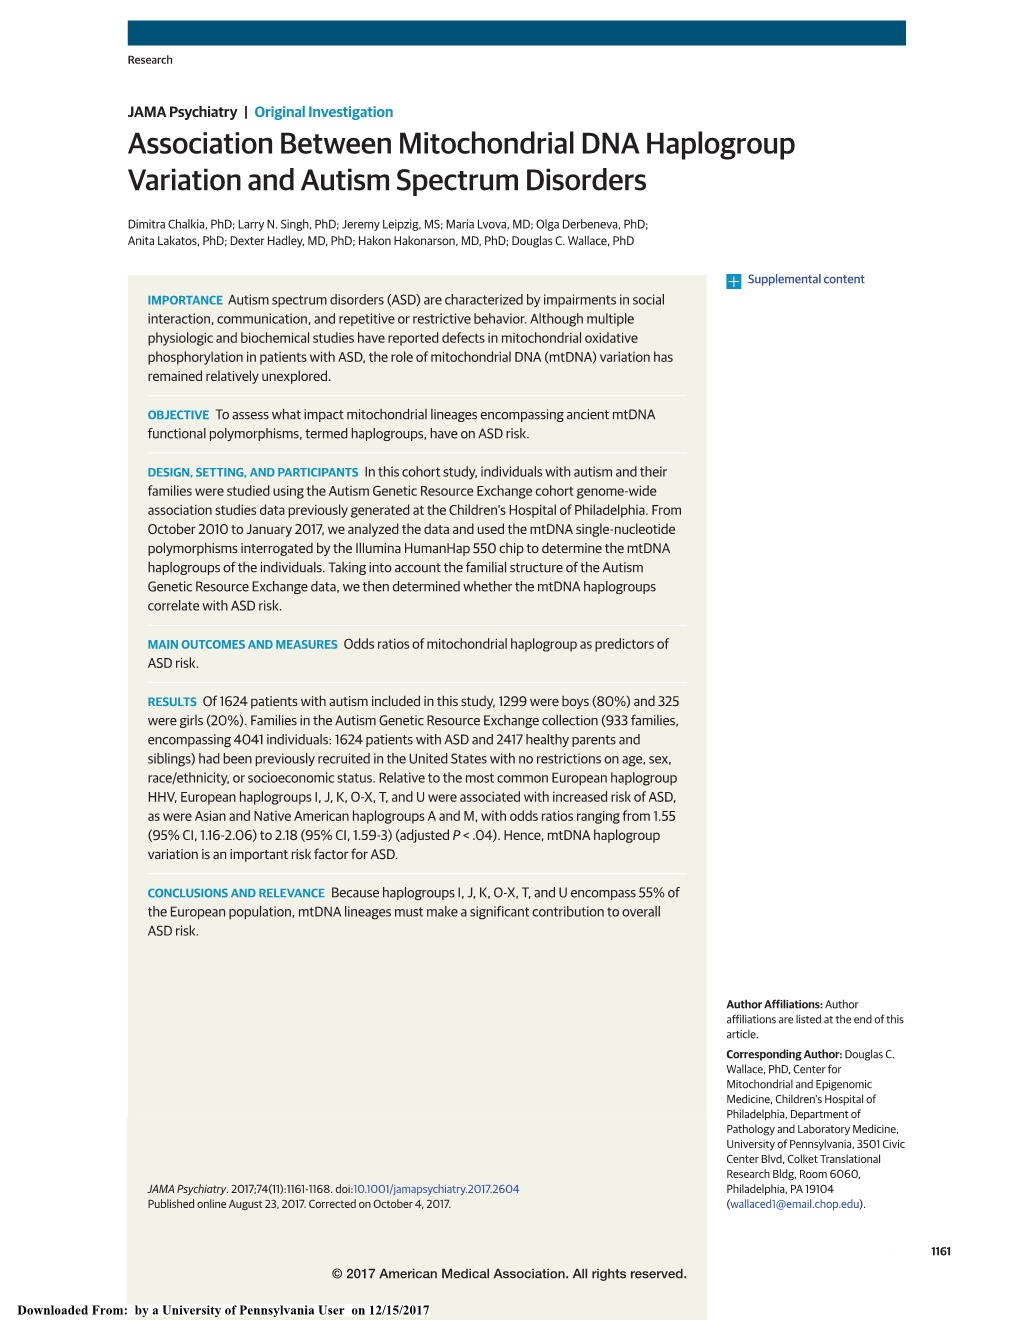 Association Between Mitochondrial DNA Haplogroup Variation and Autism Spectrum Disorders